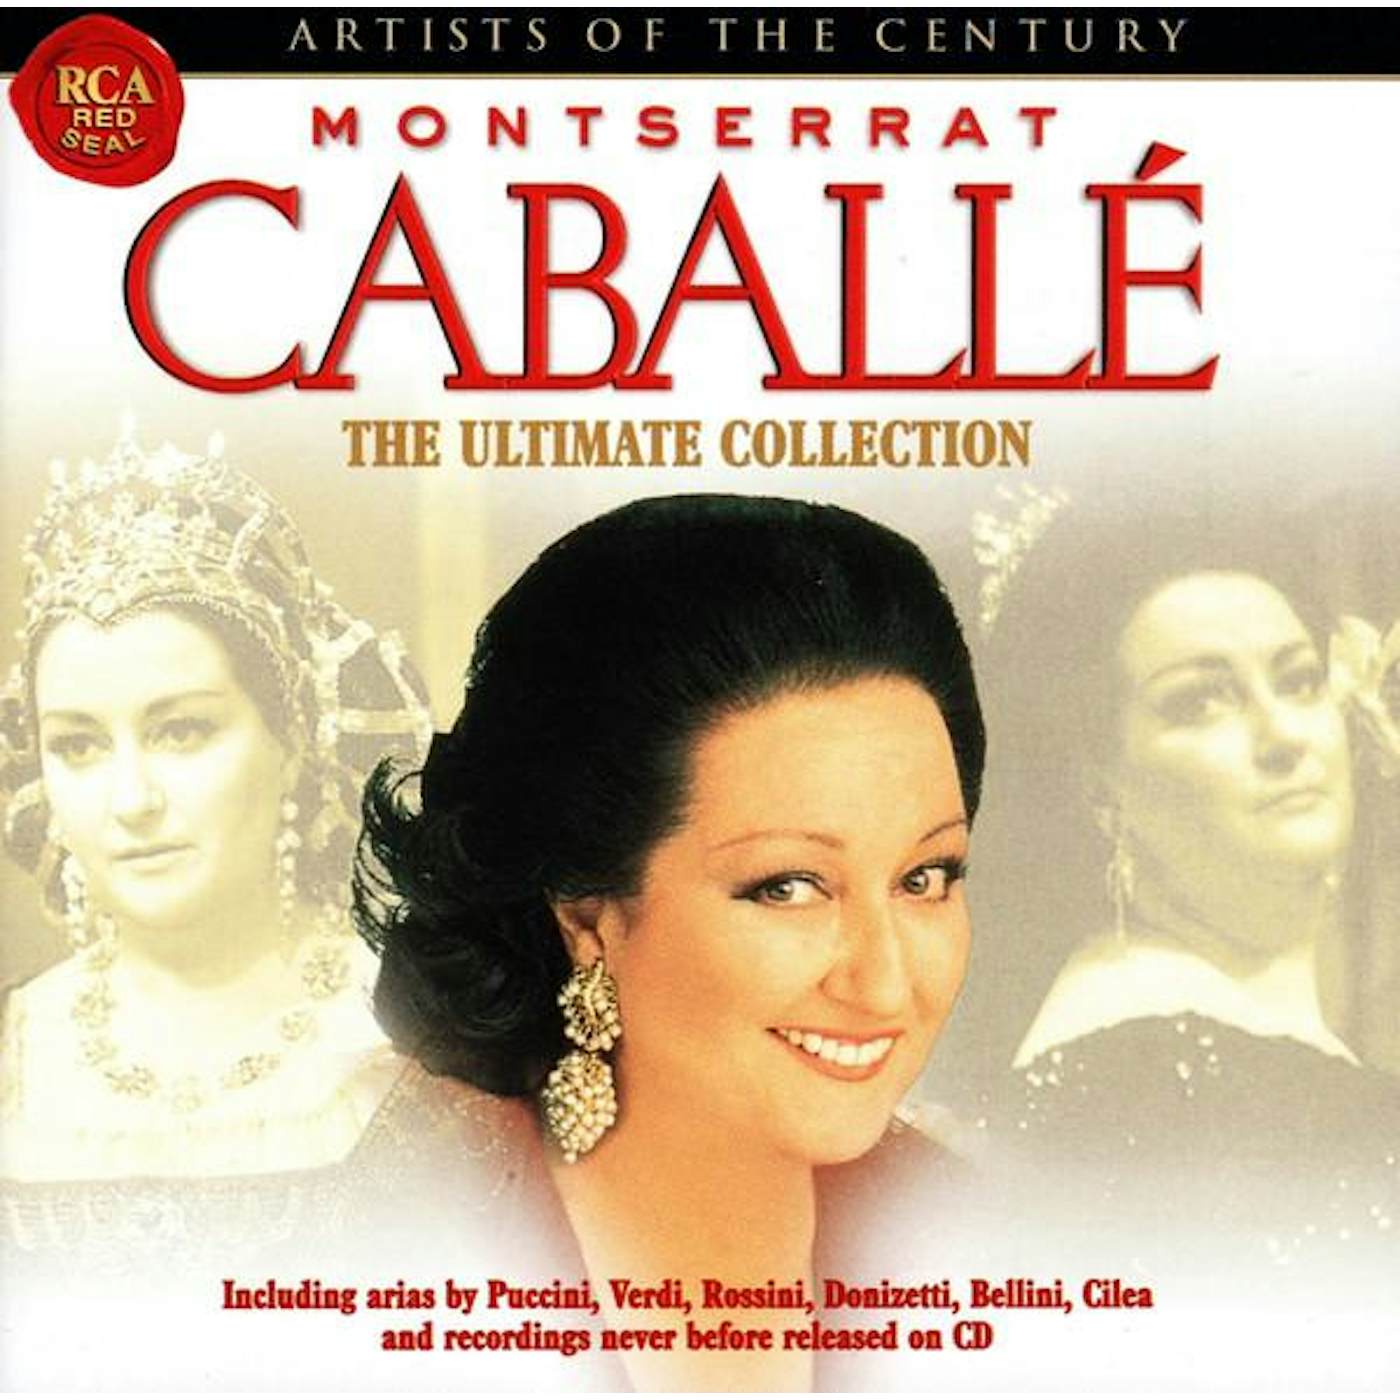 Montserrat Caballé ARTISTS OF THE CENTURY CD